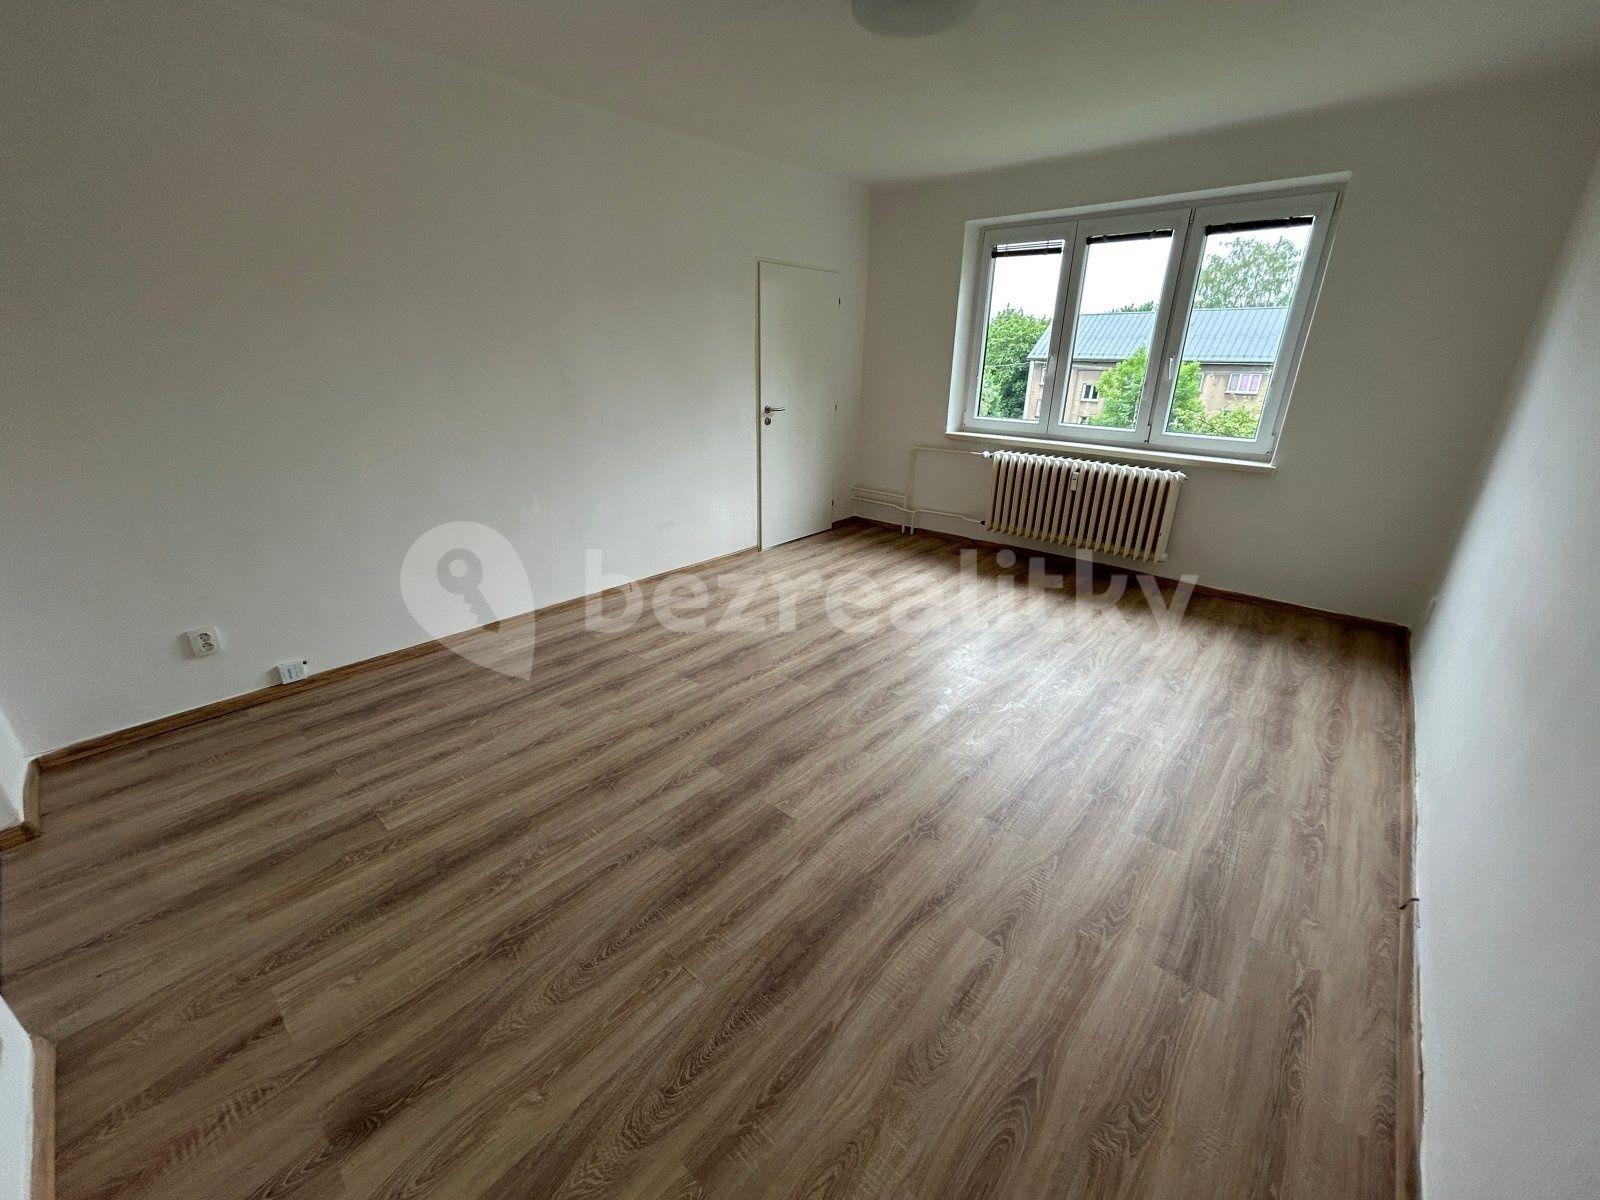 2 bedroom flat to rent, 51 m², Bernerova, Ostrava, Moravskoslezský Region